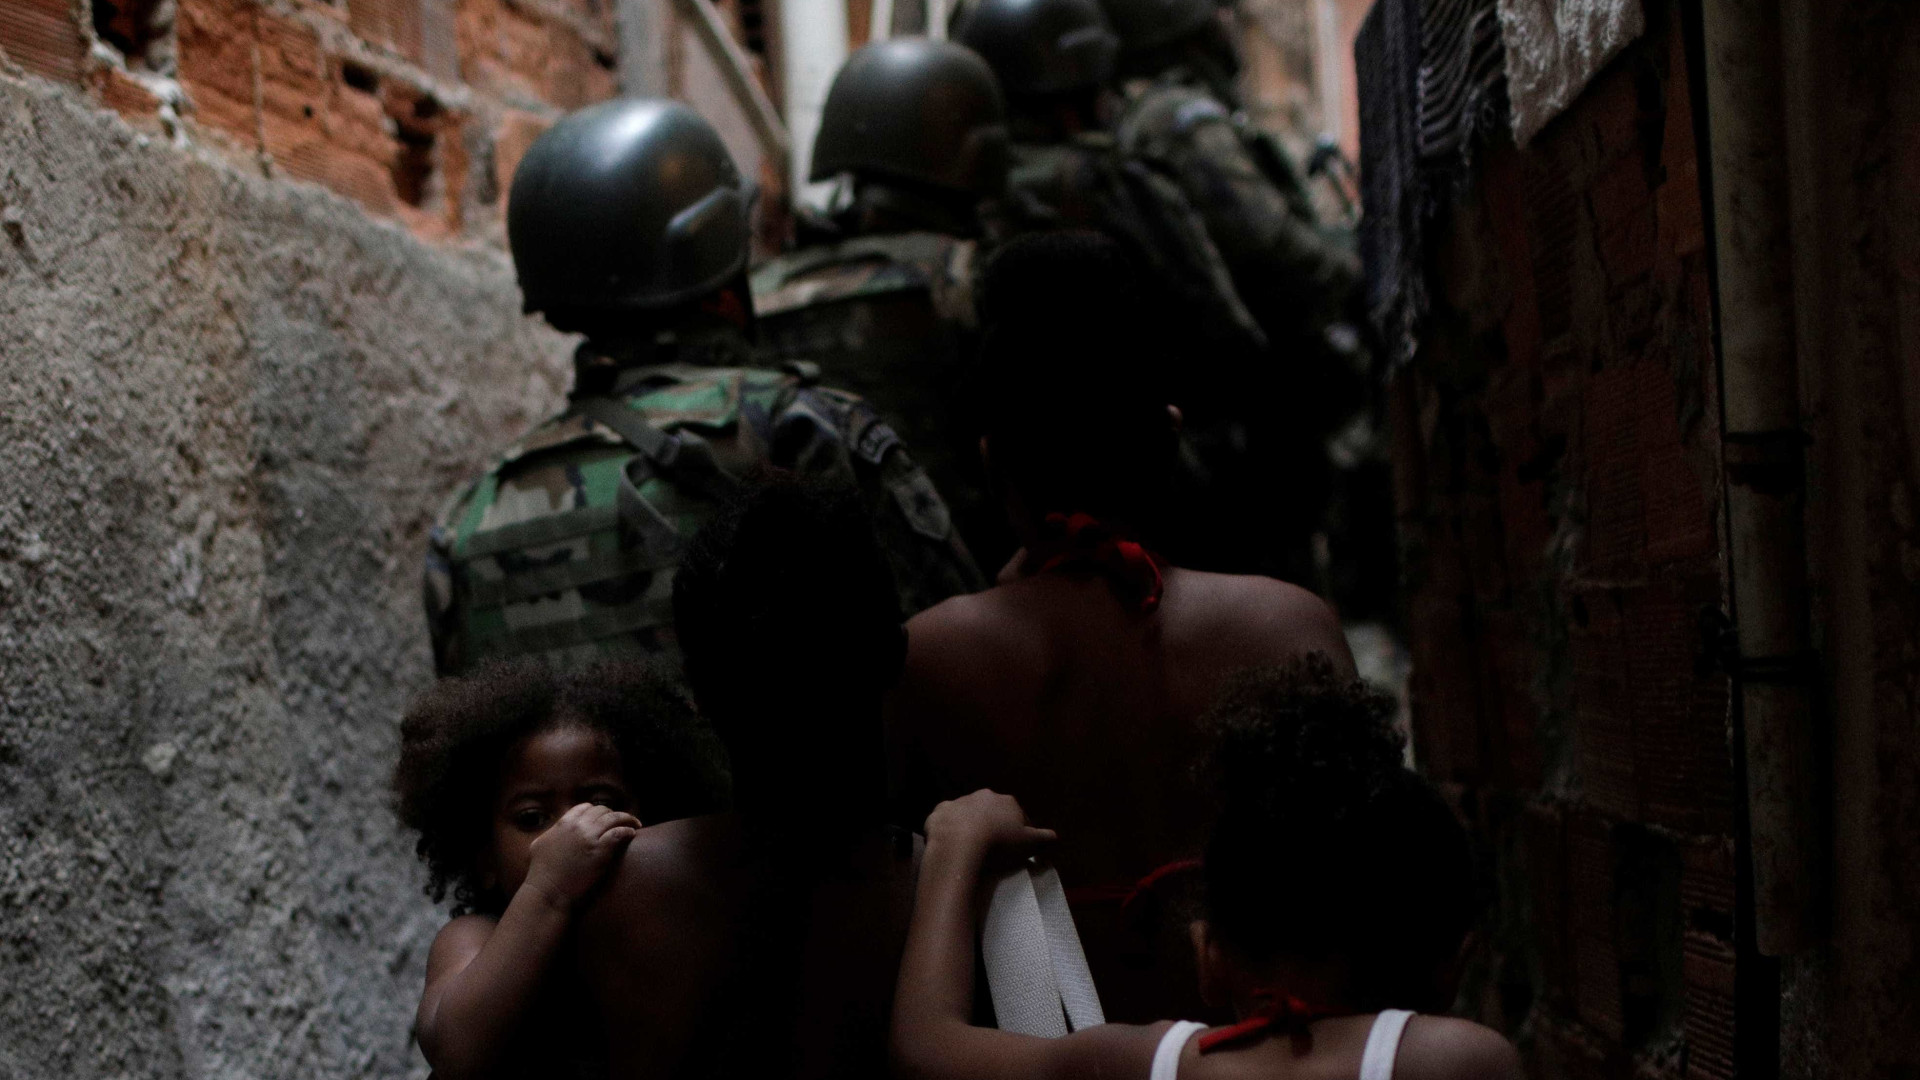 Chacina em baile funk deixa ao menos sete mortos no Rio